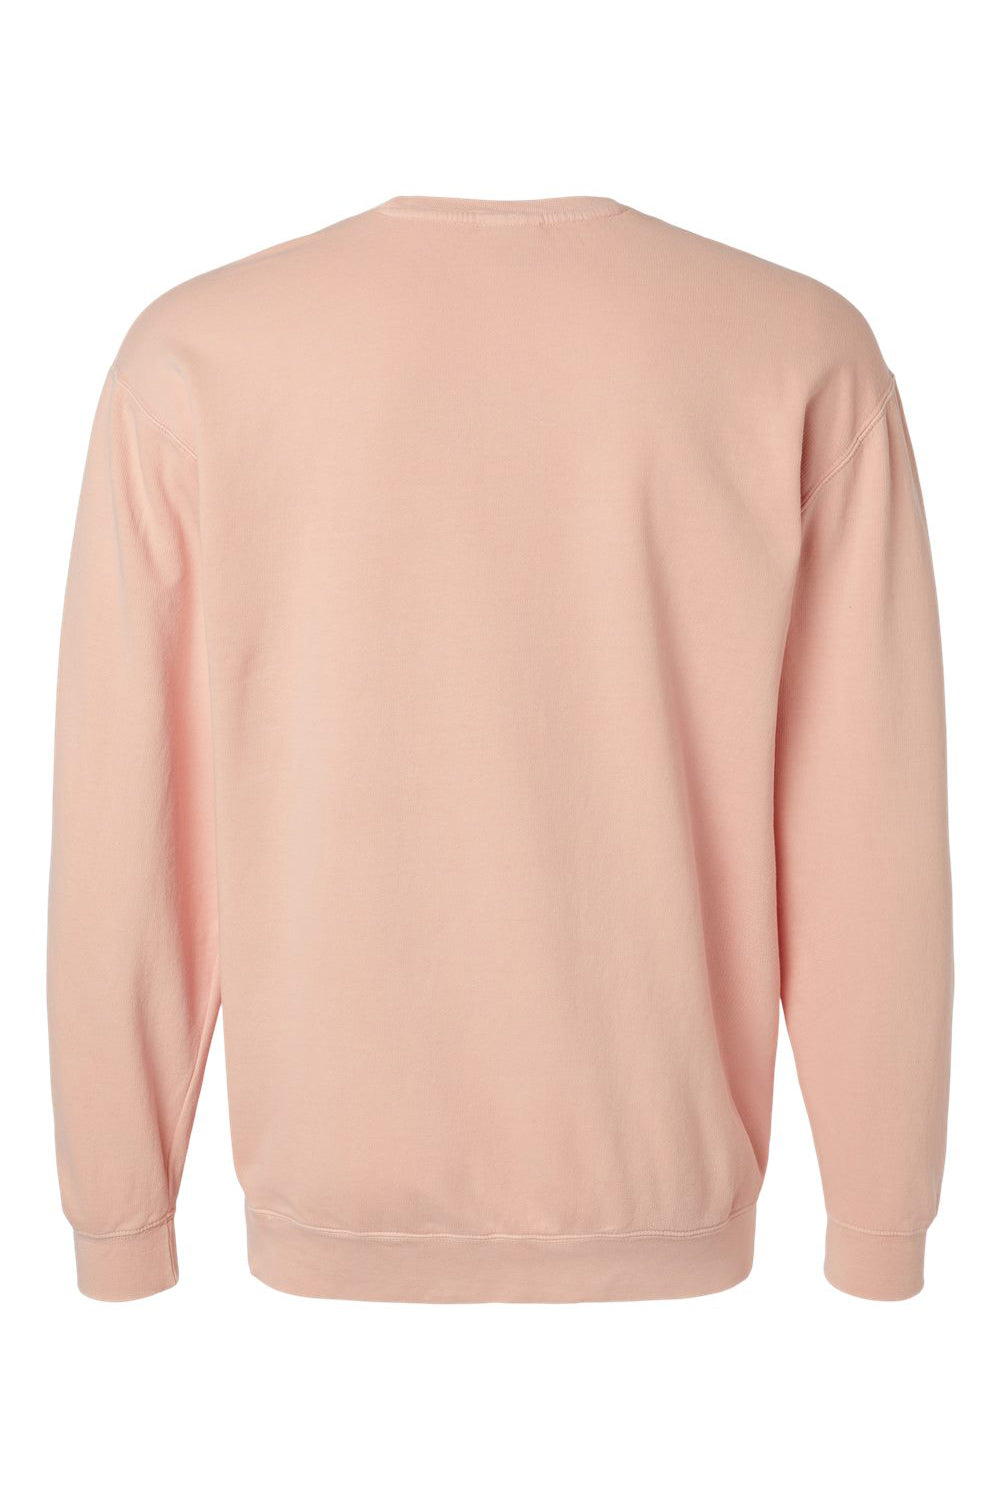 Comfort Colors 1466 Mens Garment Dyed Fleece Crewneck Sweatshirt Peachy Flat Back